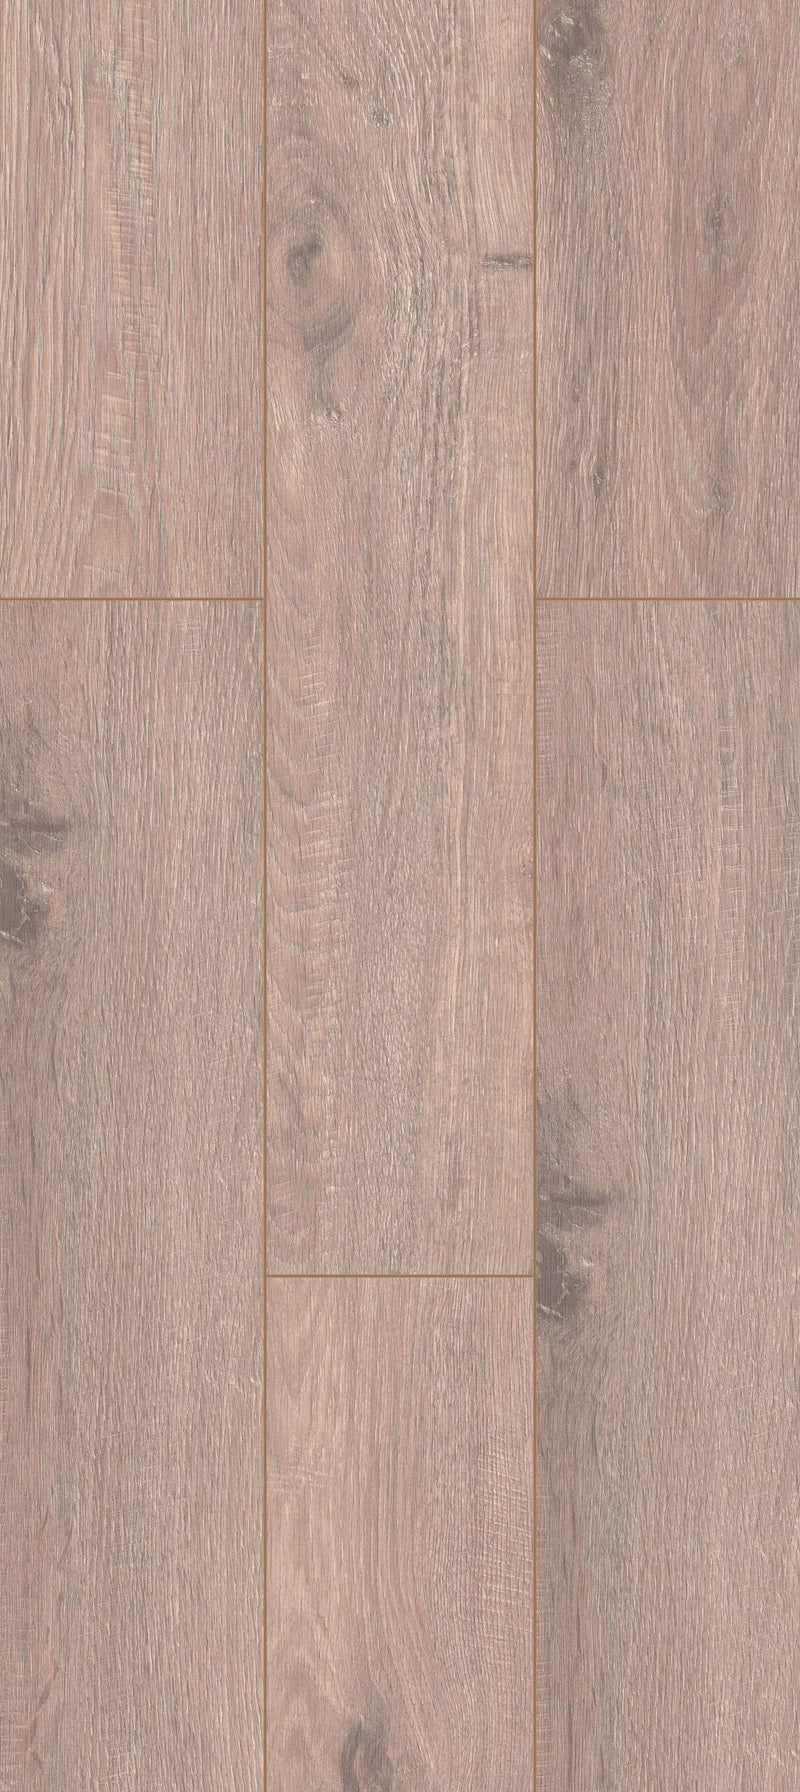 Load image into Gallery viewer, dibek mese oak laminate flooring
